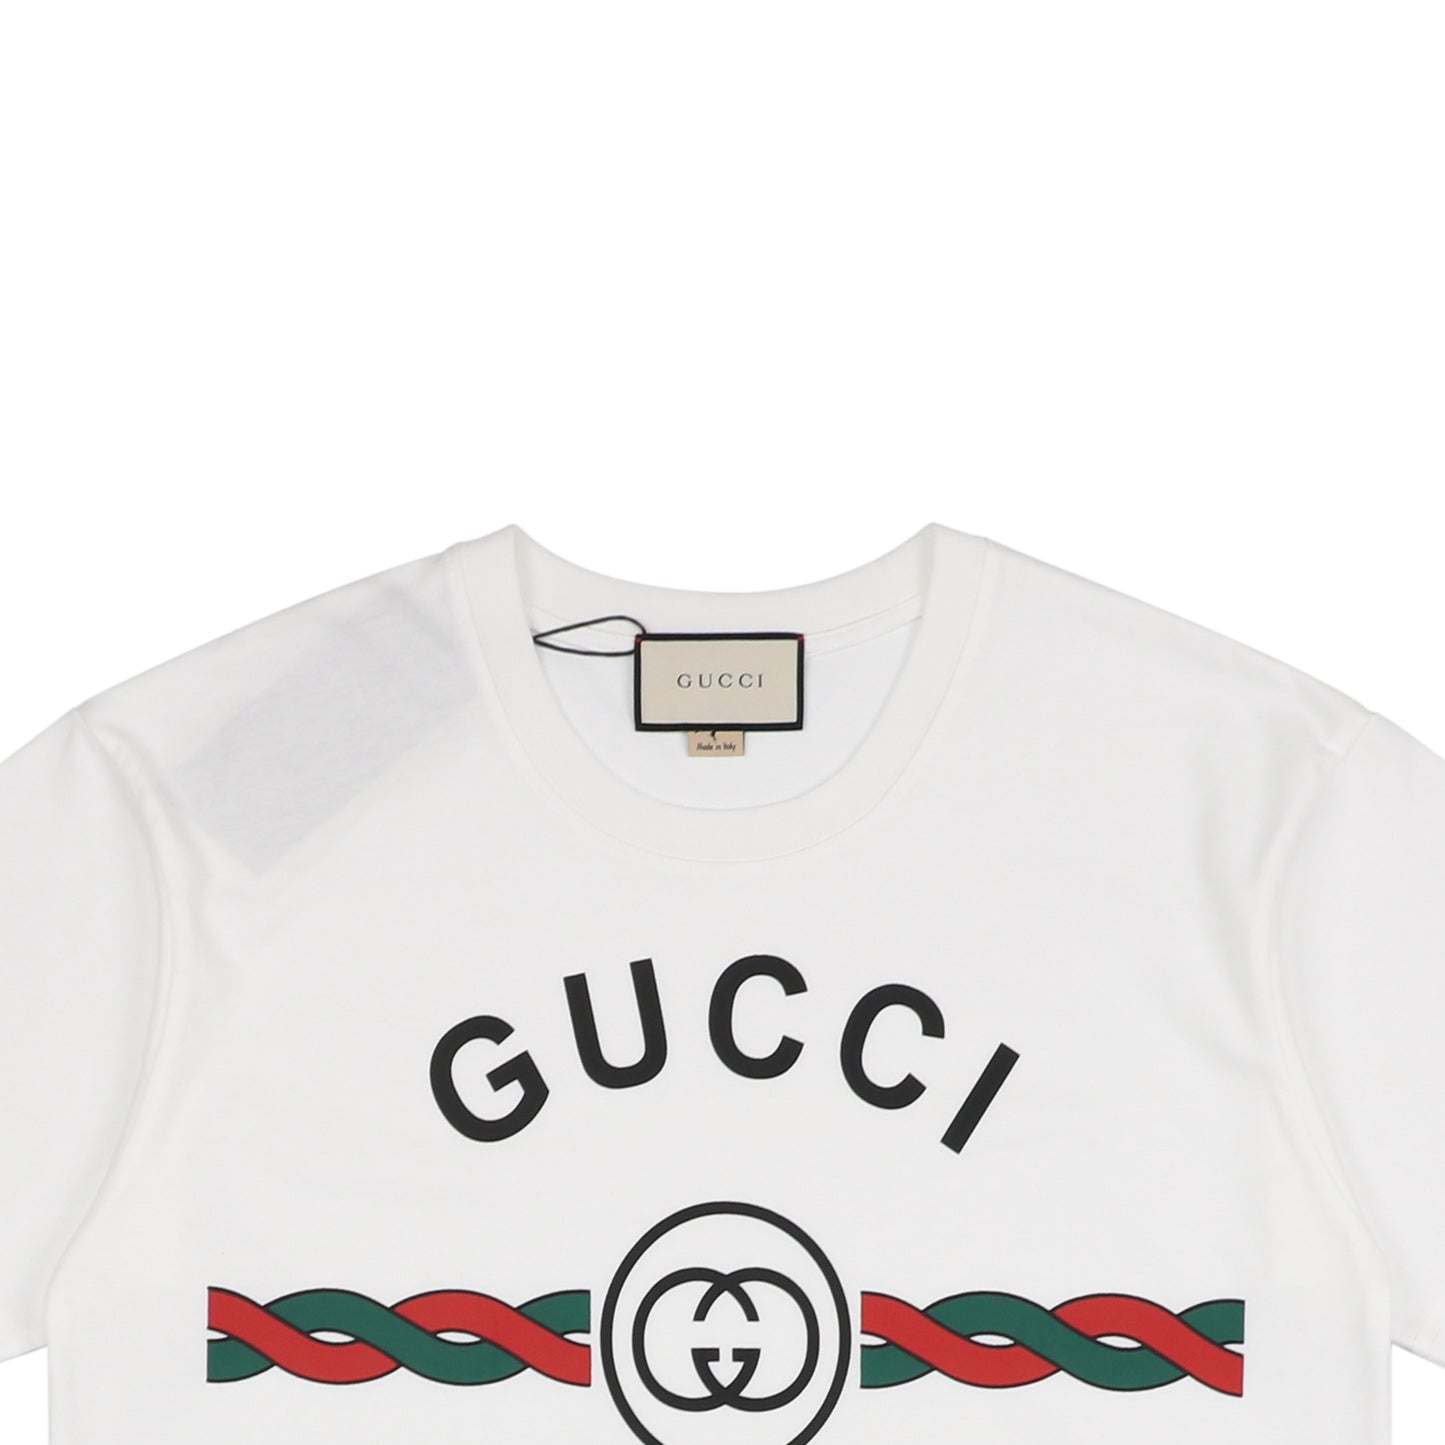 Gucc1 Cotton Jersey 'Gucci Firenze 1921' White T-Shirt